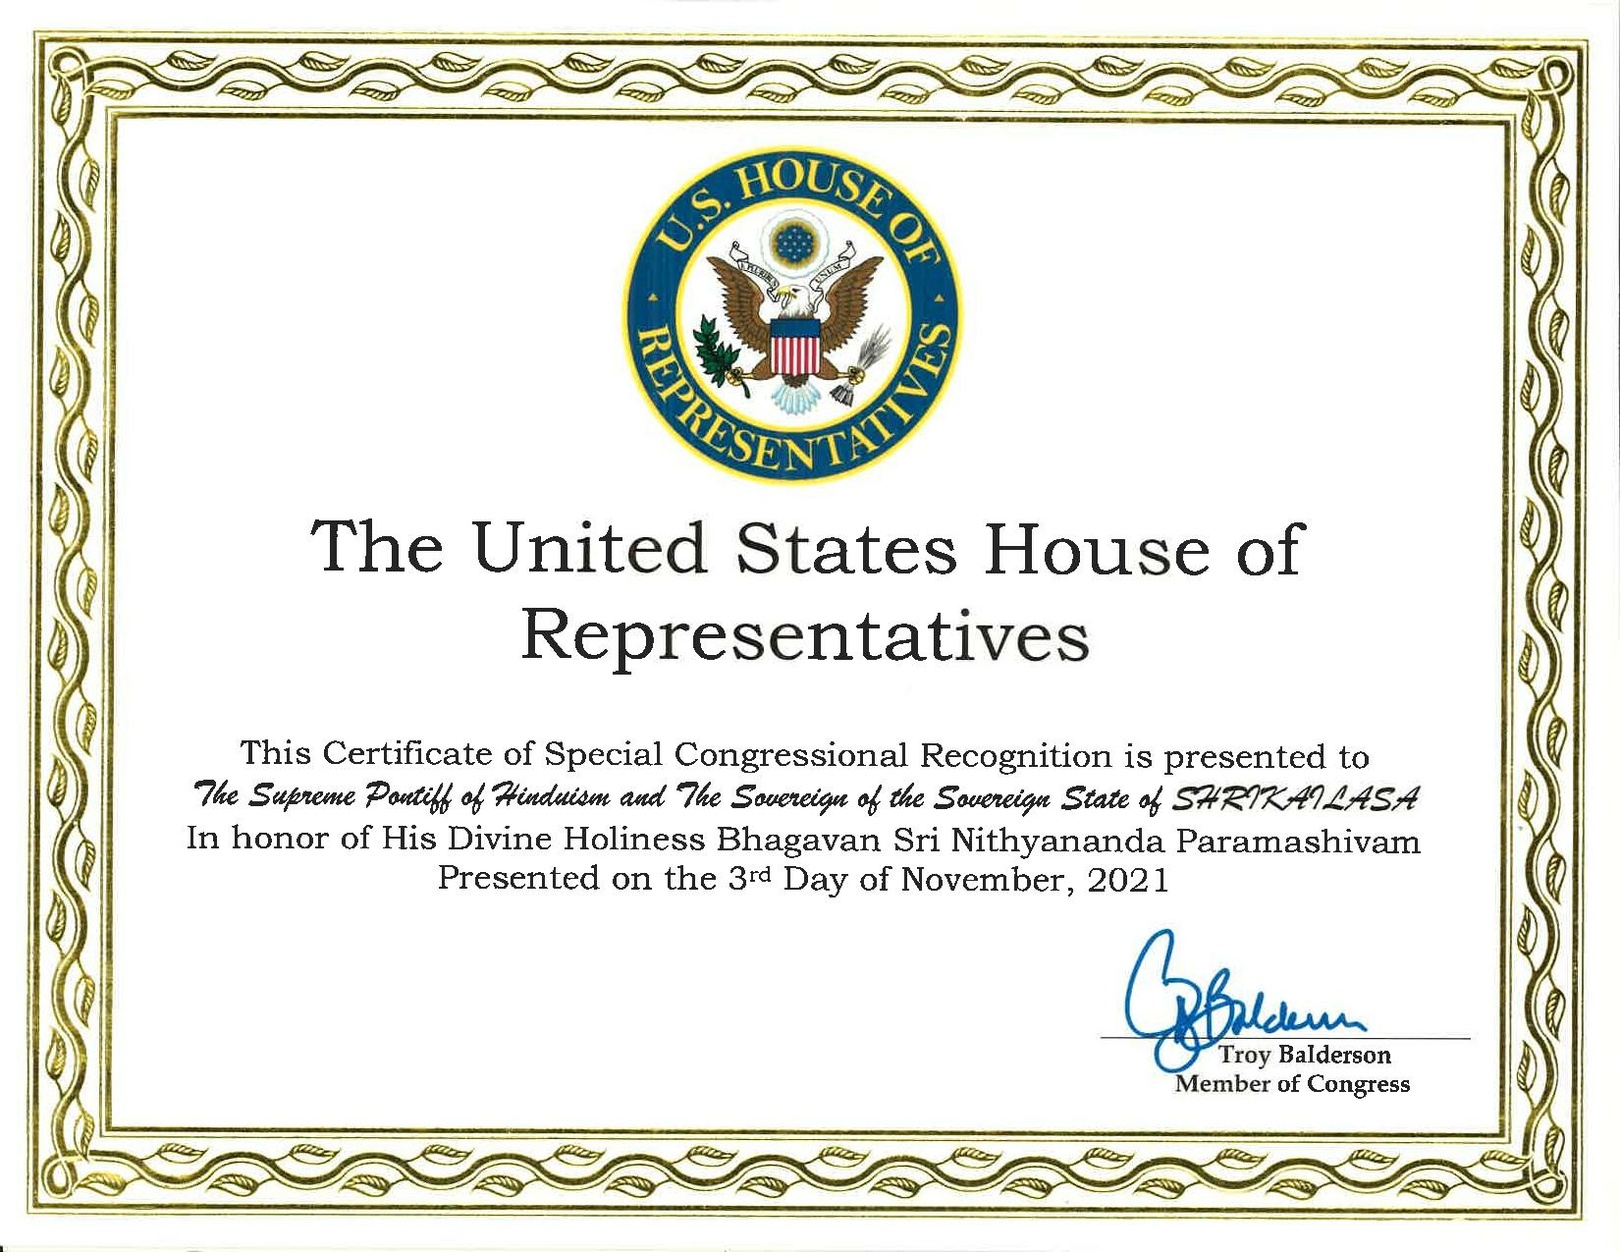 Proclamation-United-States-of-America-house-of-representatives-troy-balderson-2021-11-03.jpg